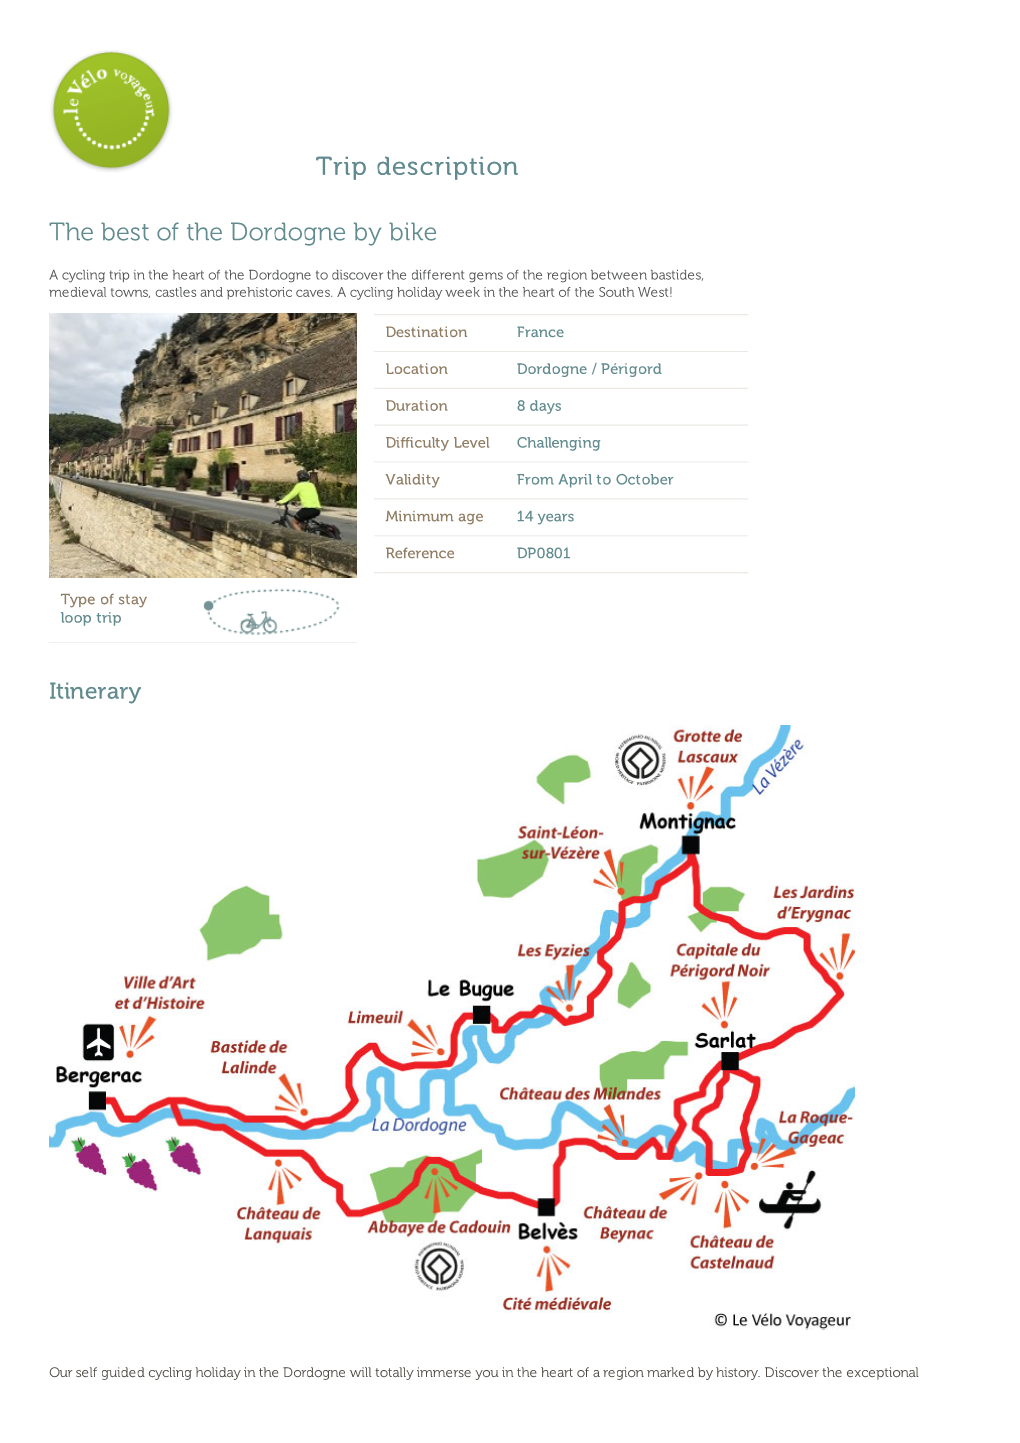 Trip Description the Best of the Dordogne by Bike